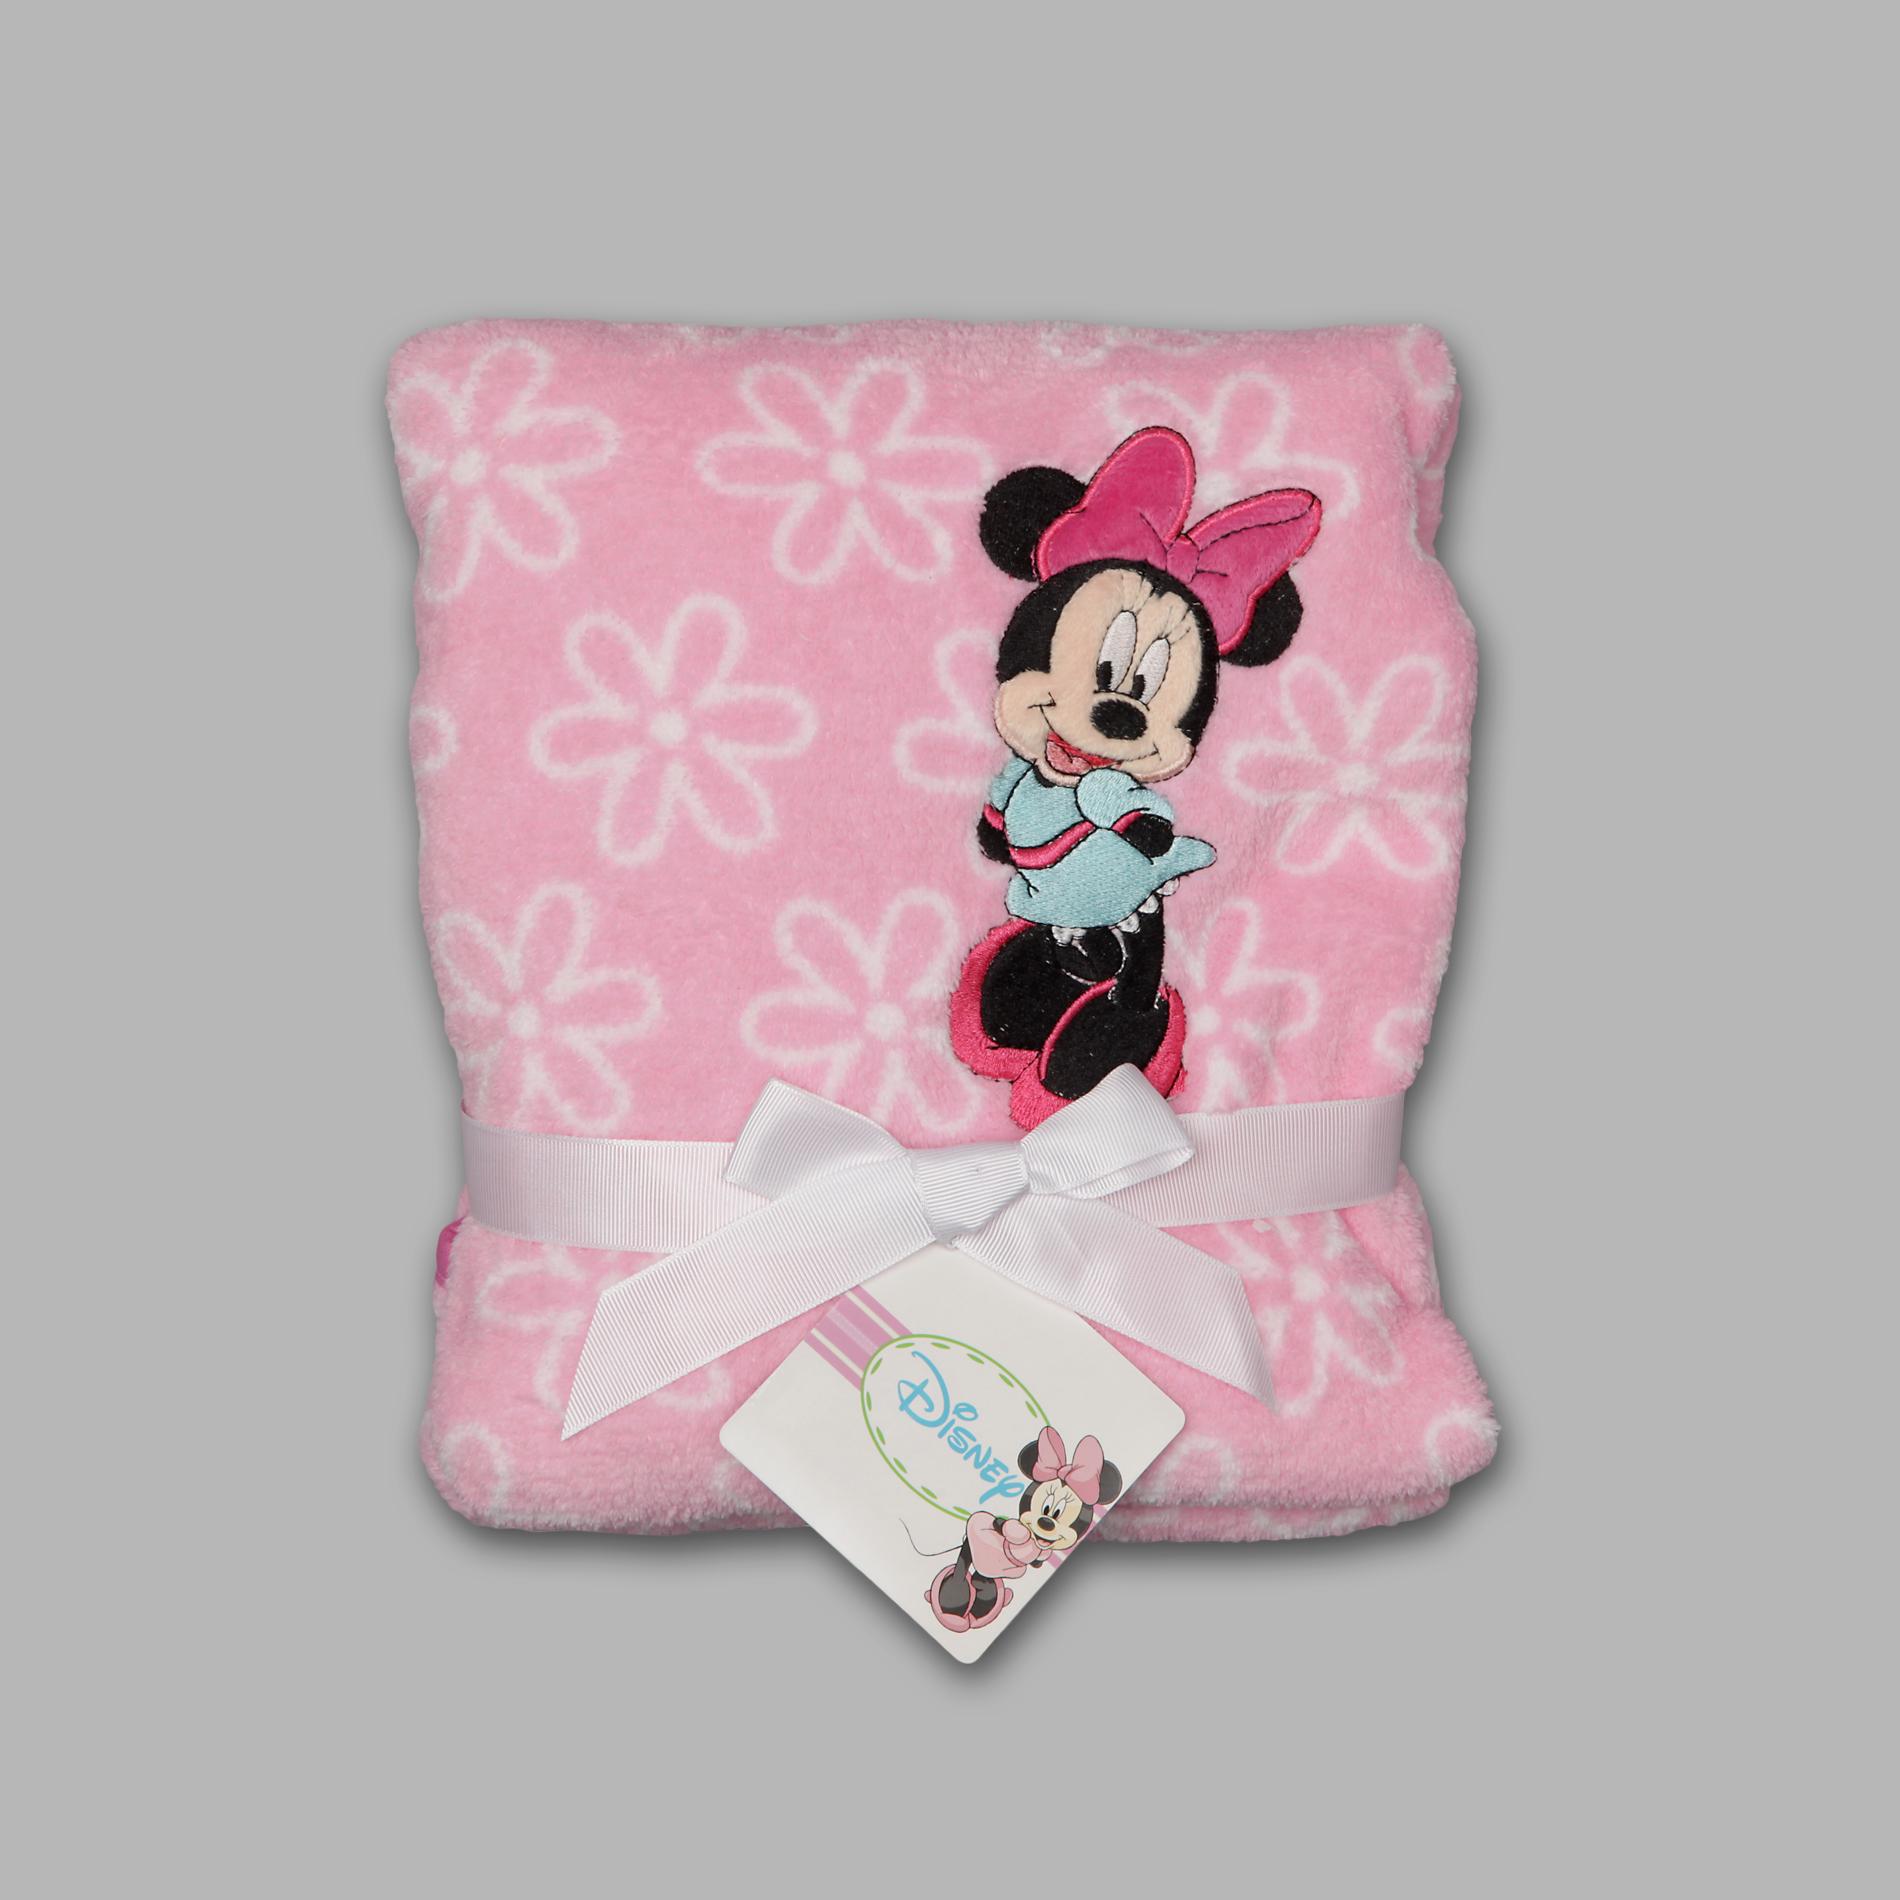 Disney Minnie Mouse Infant's Fleece Blanket